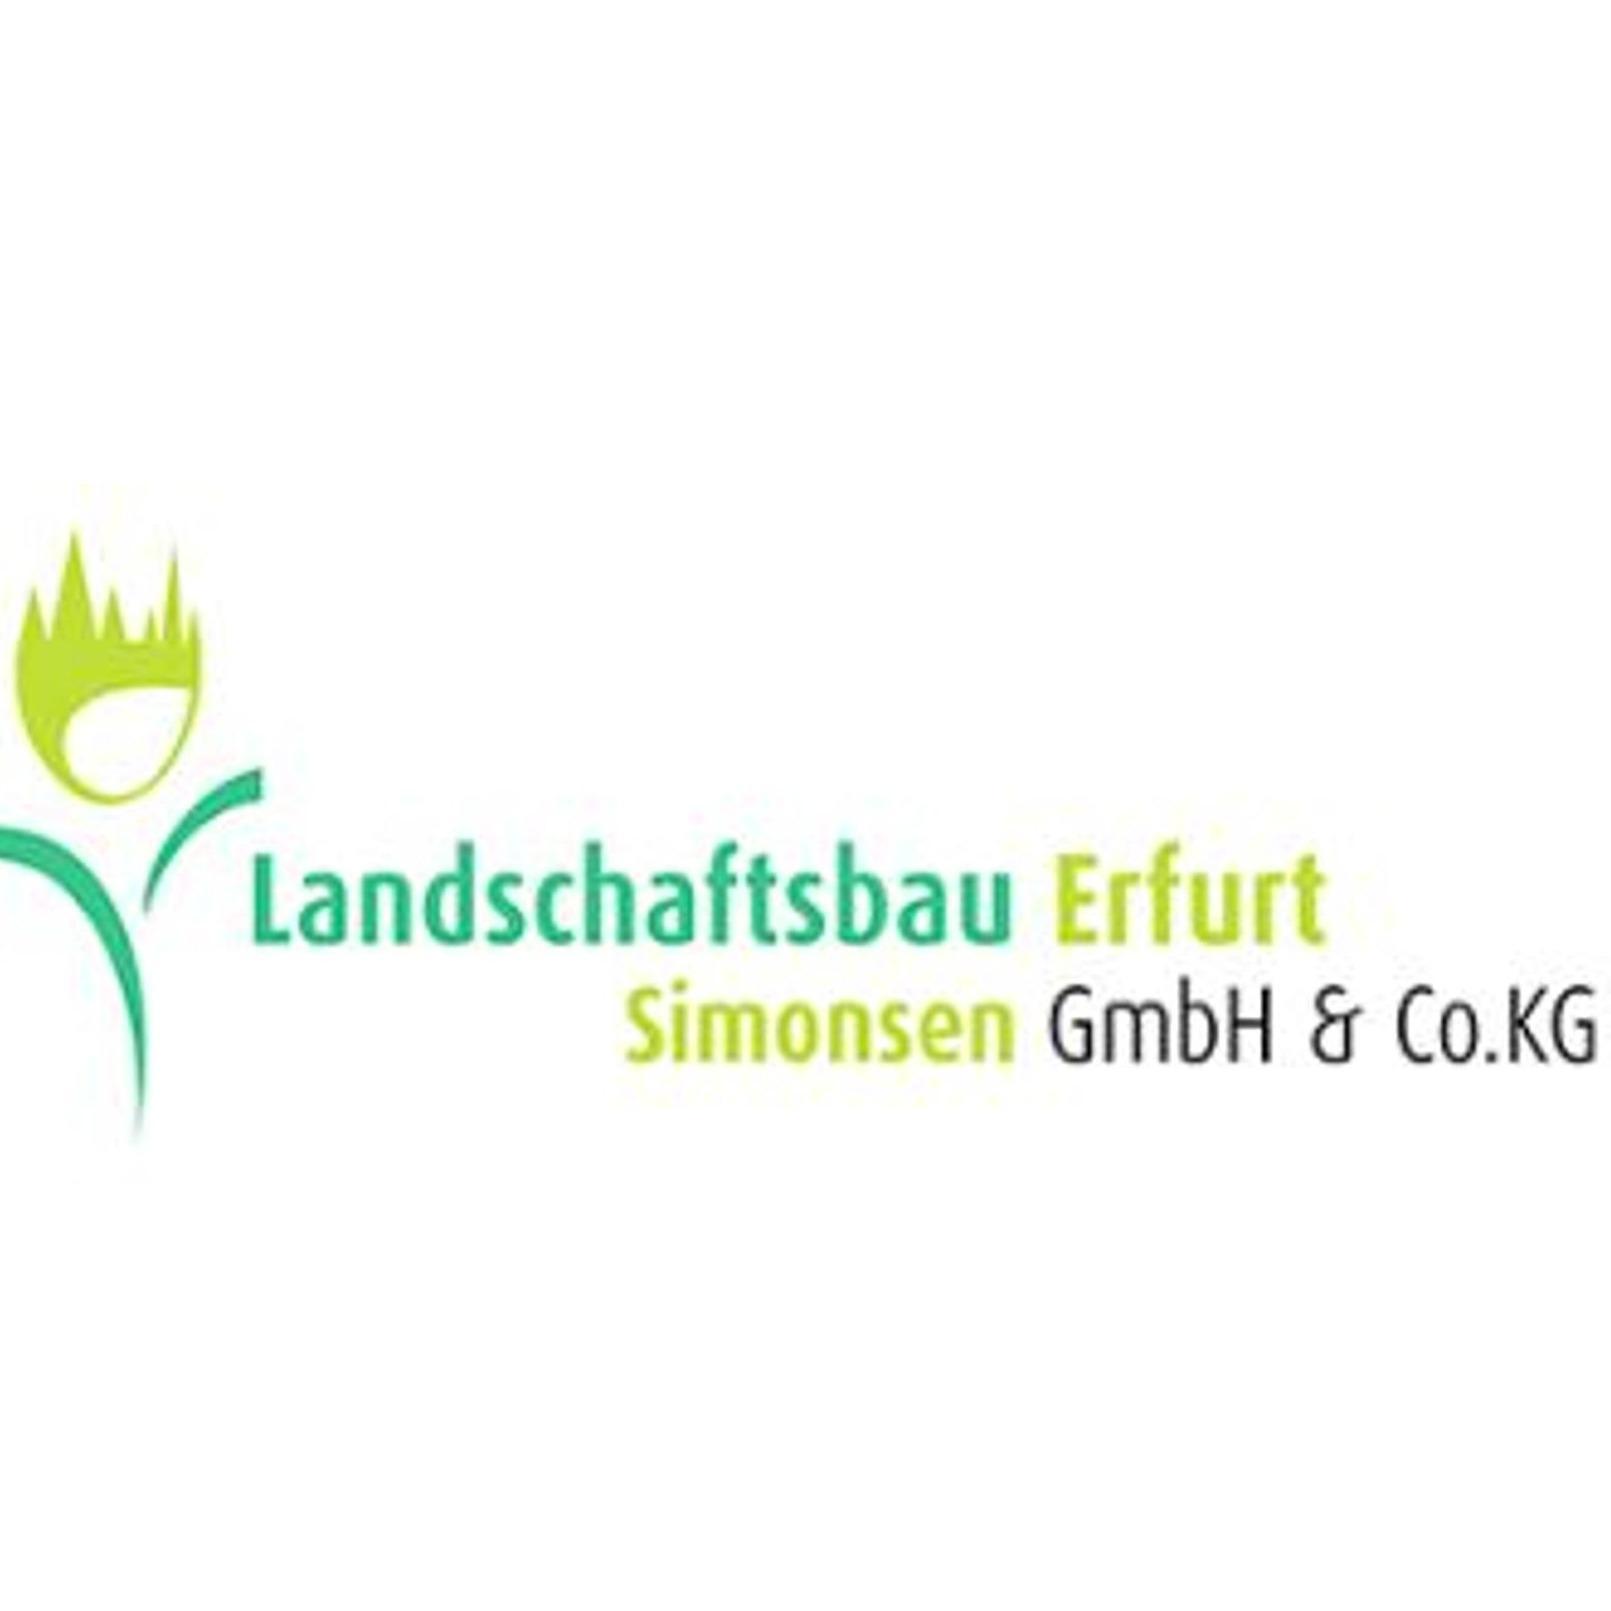 Landschaftsbau Erfurt Simonsen GmbH & Co. KG  